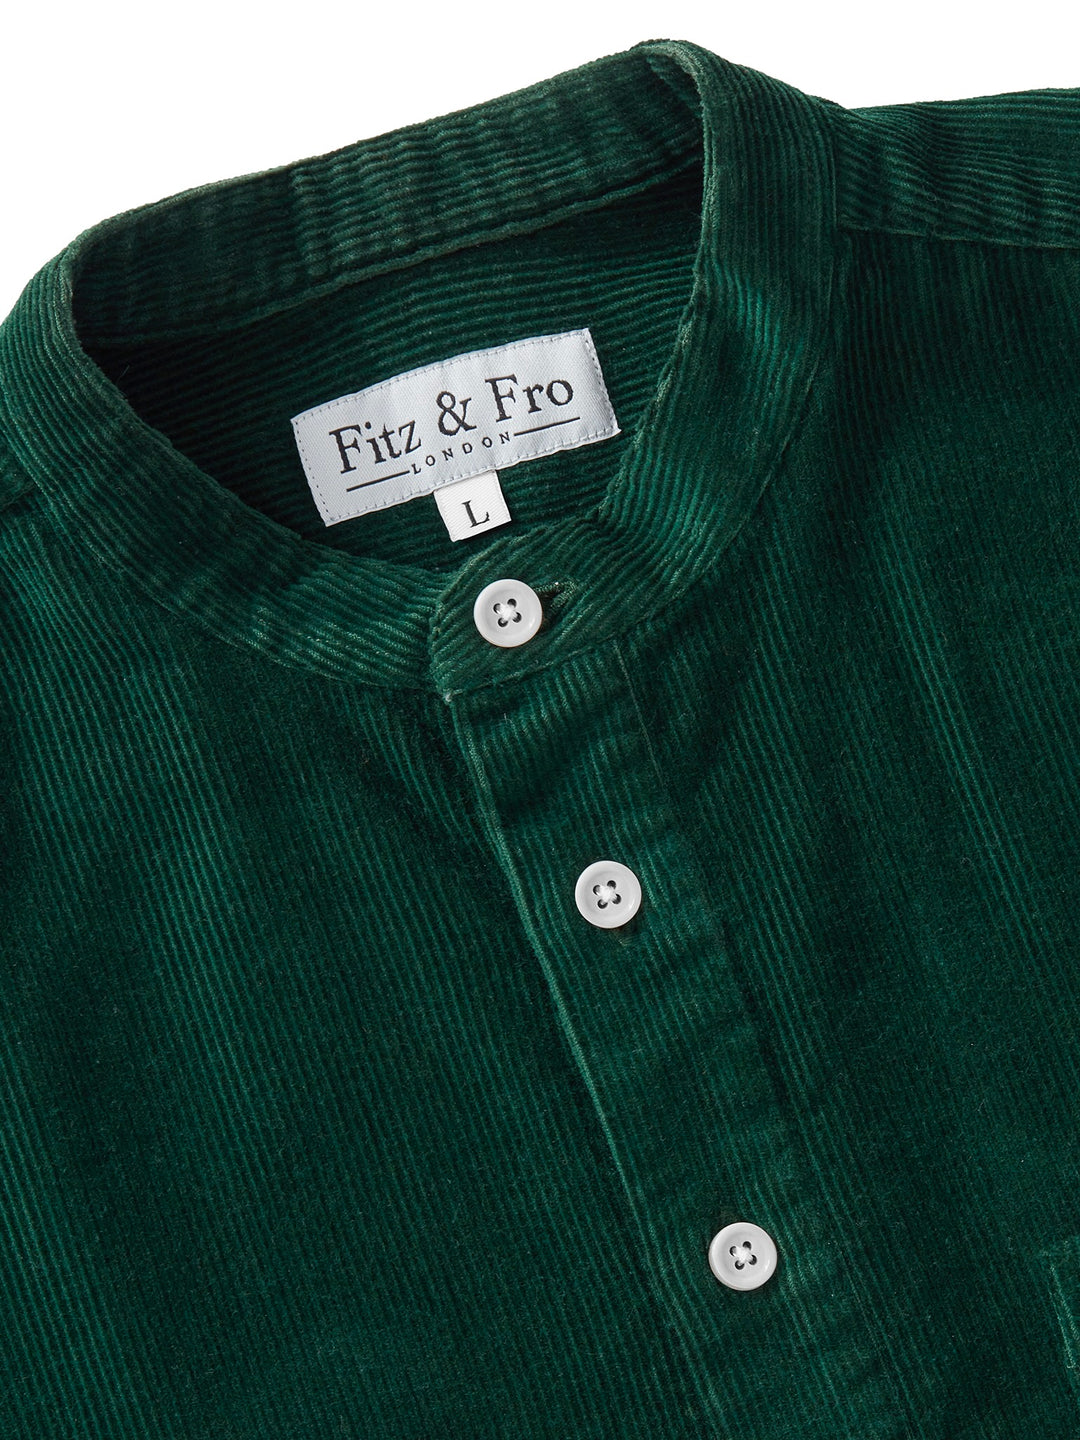 Fitz & Fro | British Menswear